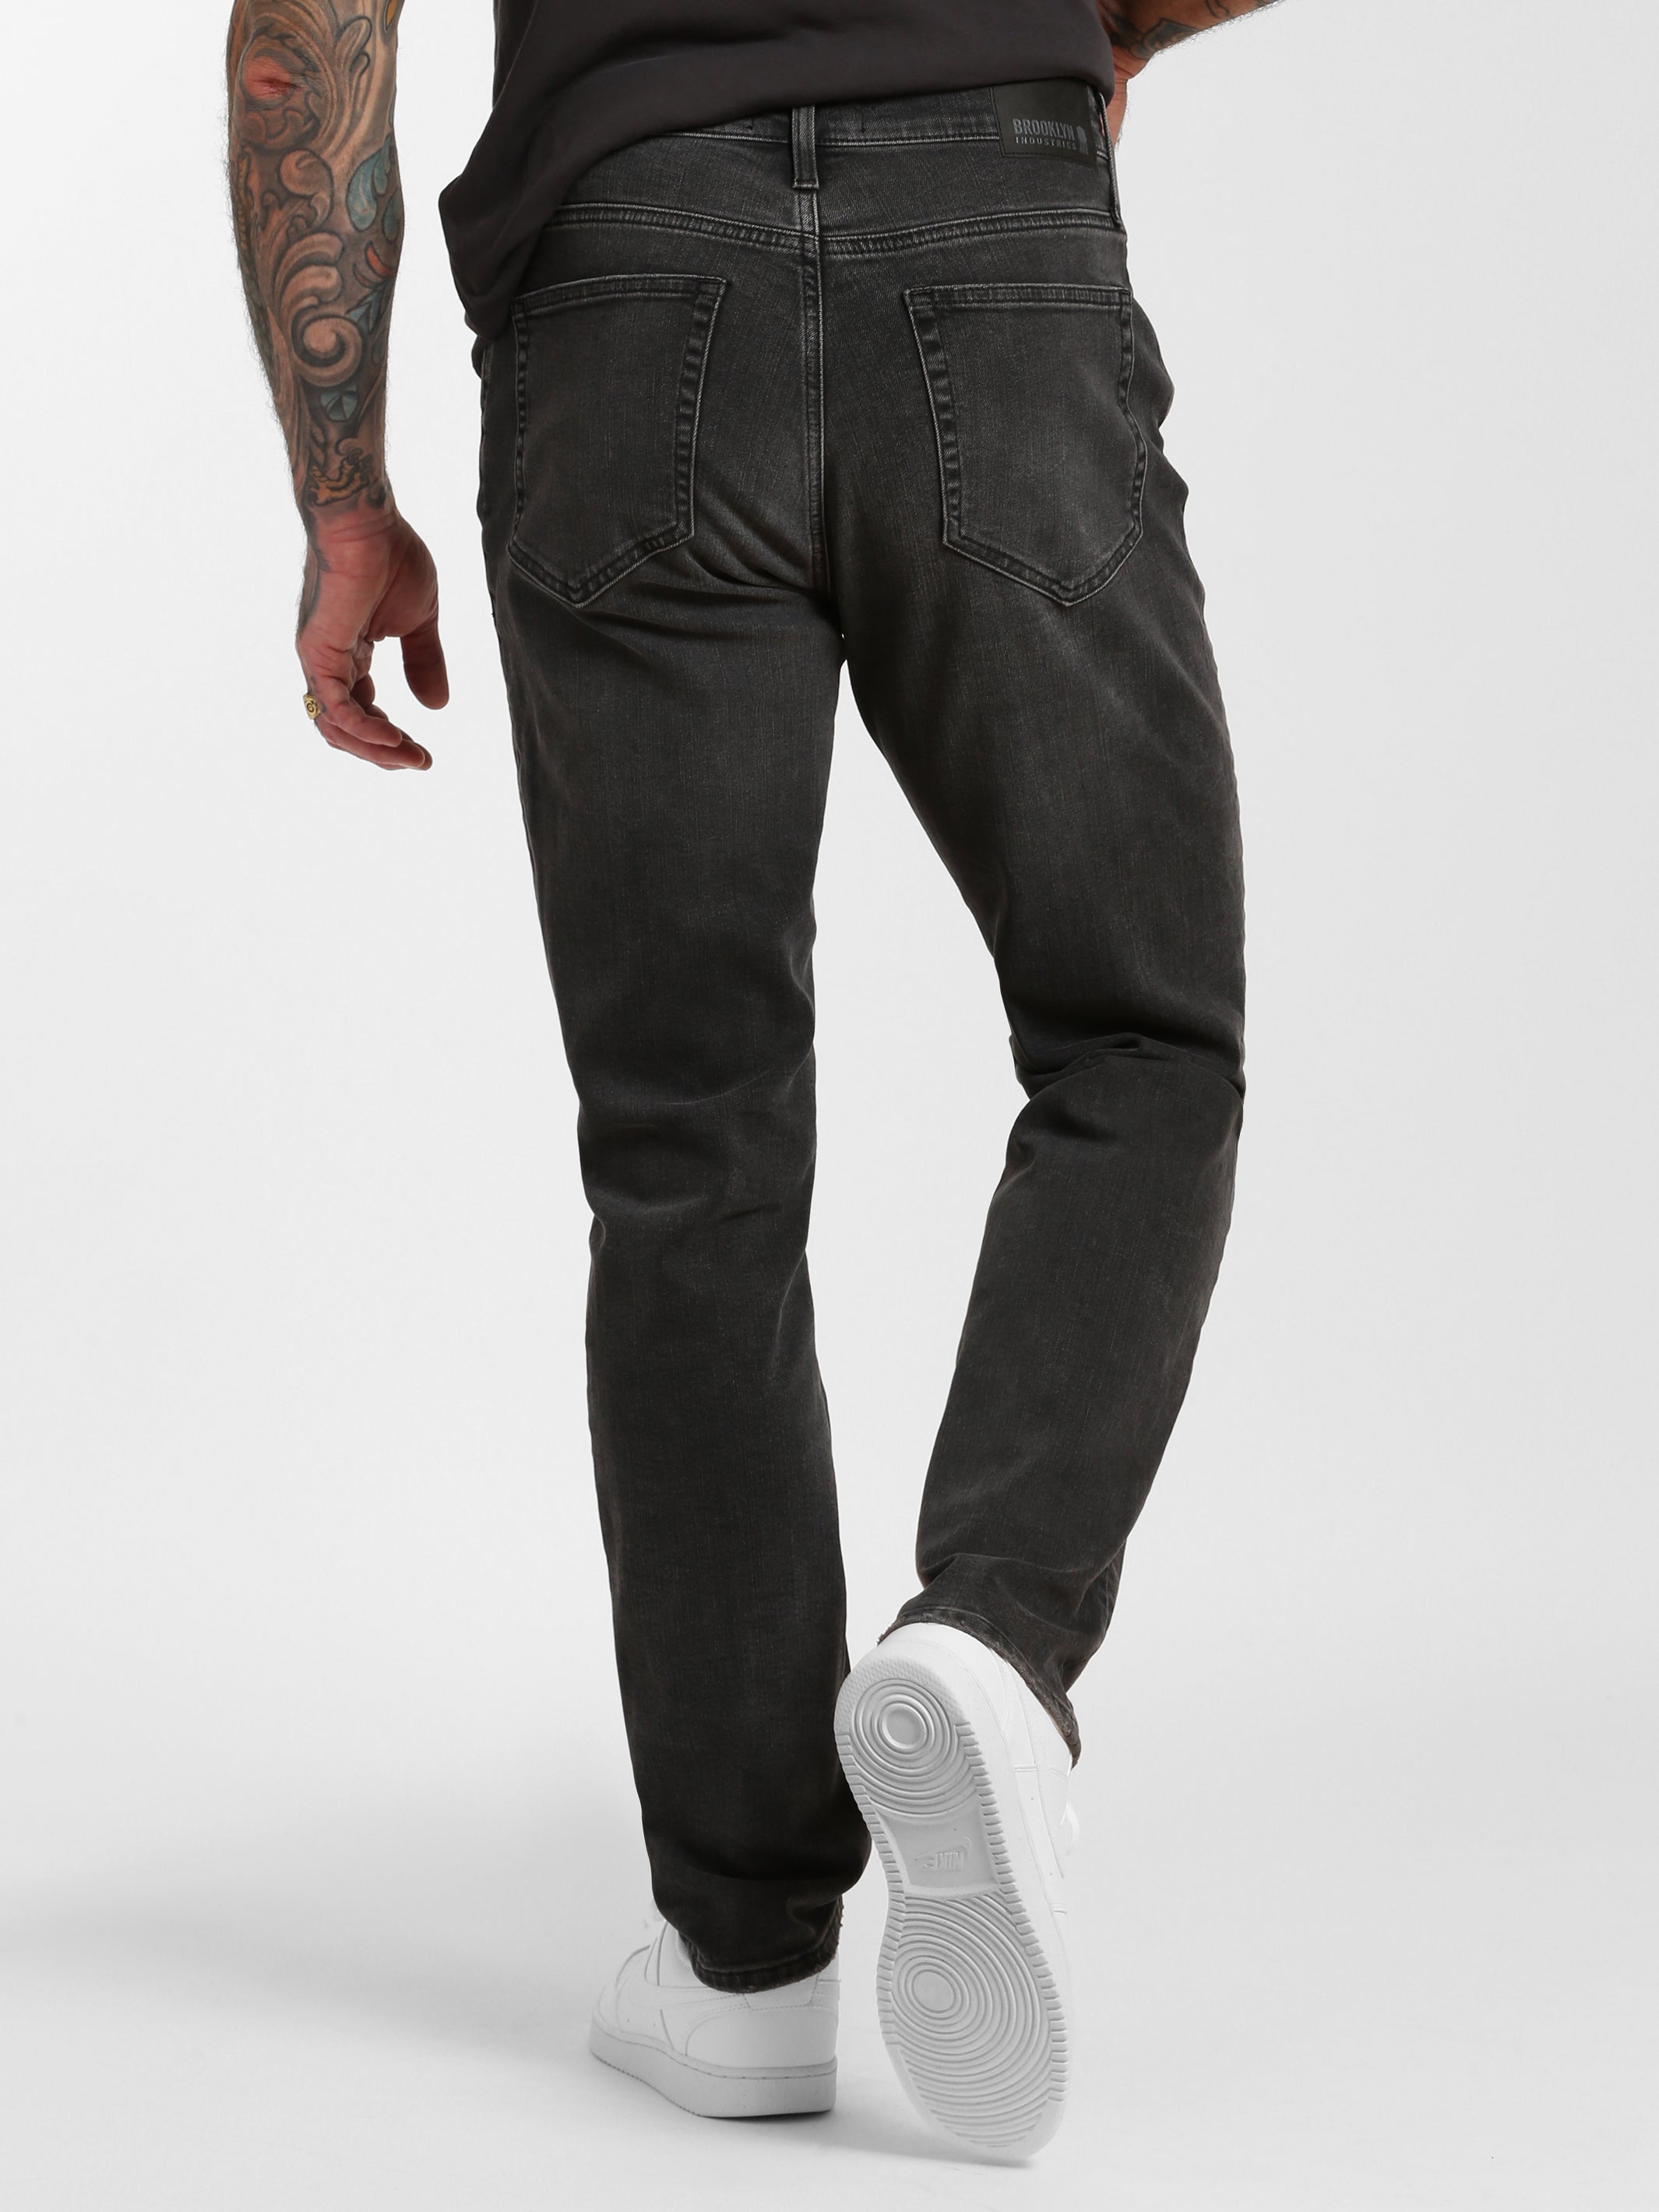 Franklin Athletic Fit Jeans in Mid Smoke Denim - BROOKLYN INDUSTRIES